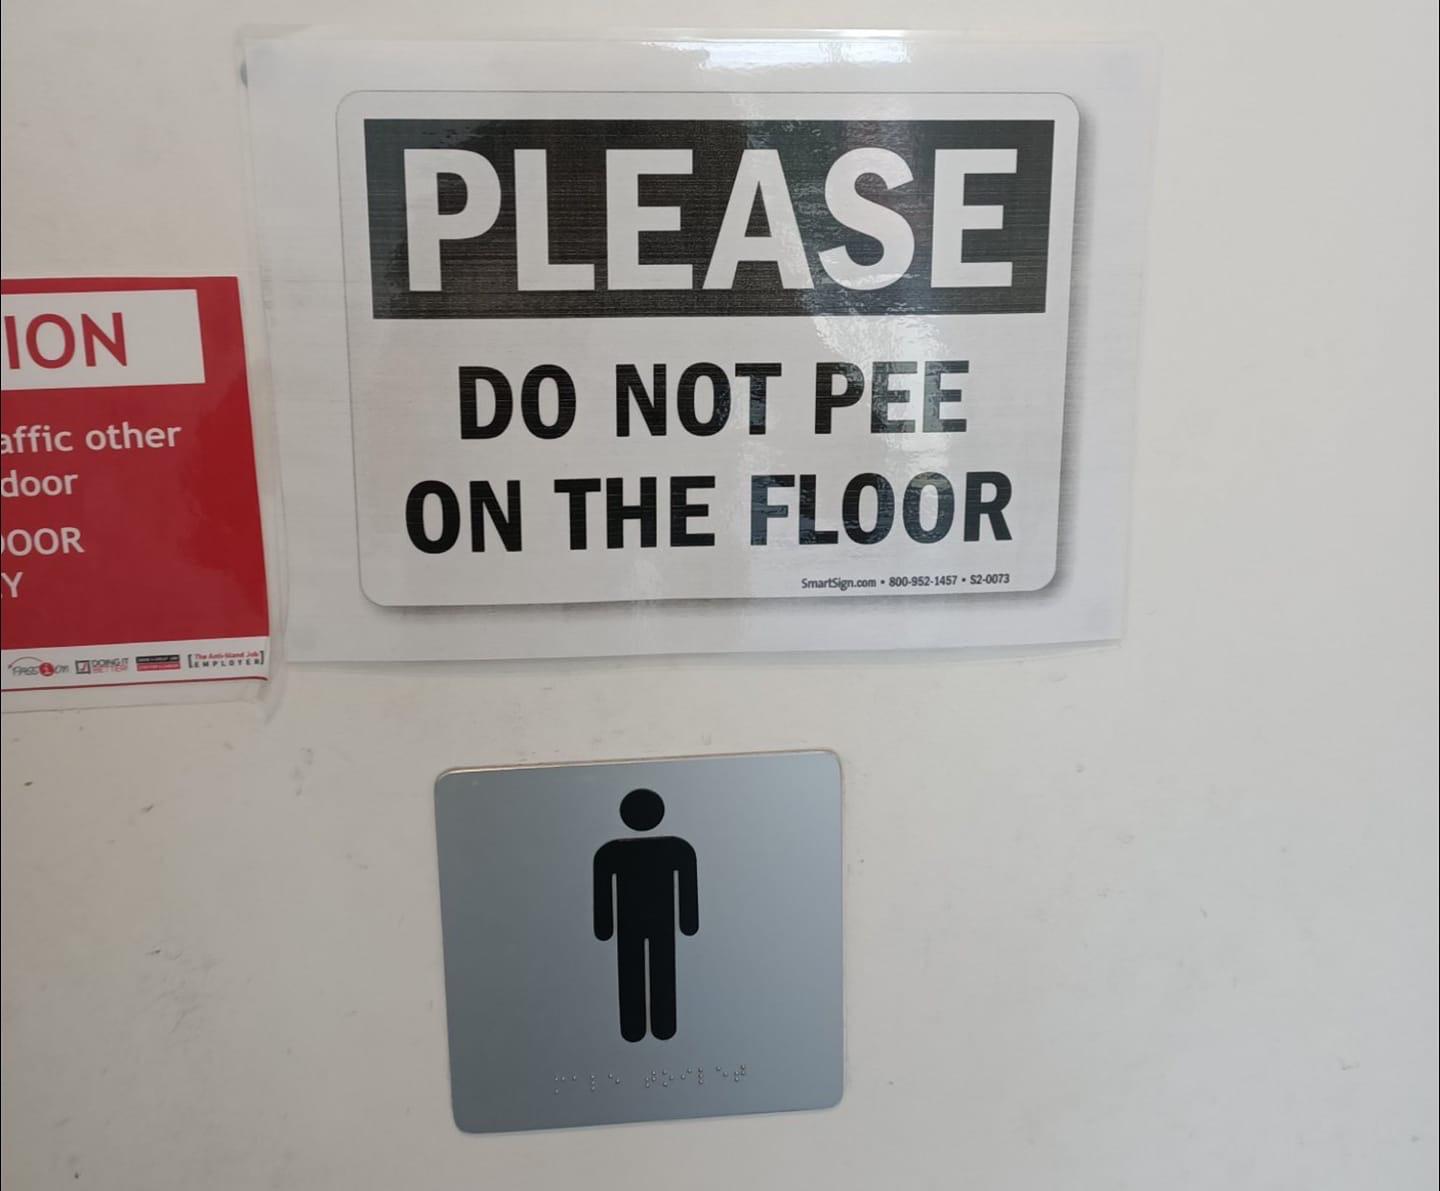 signage - Ion Please Do Not Pee On The Floor affic other door Oor SmartSign.com 8009521457. 520073